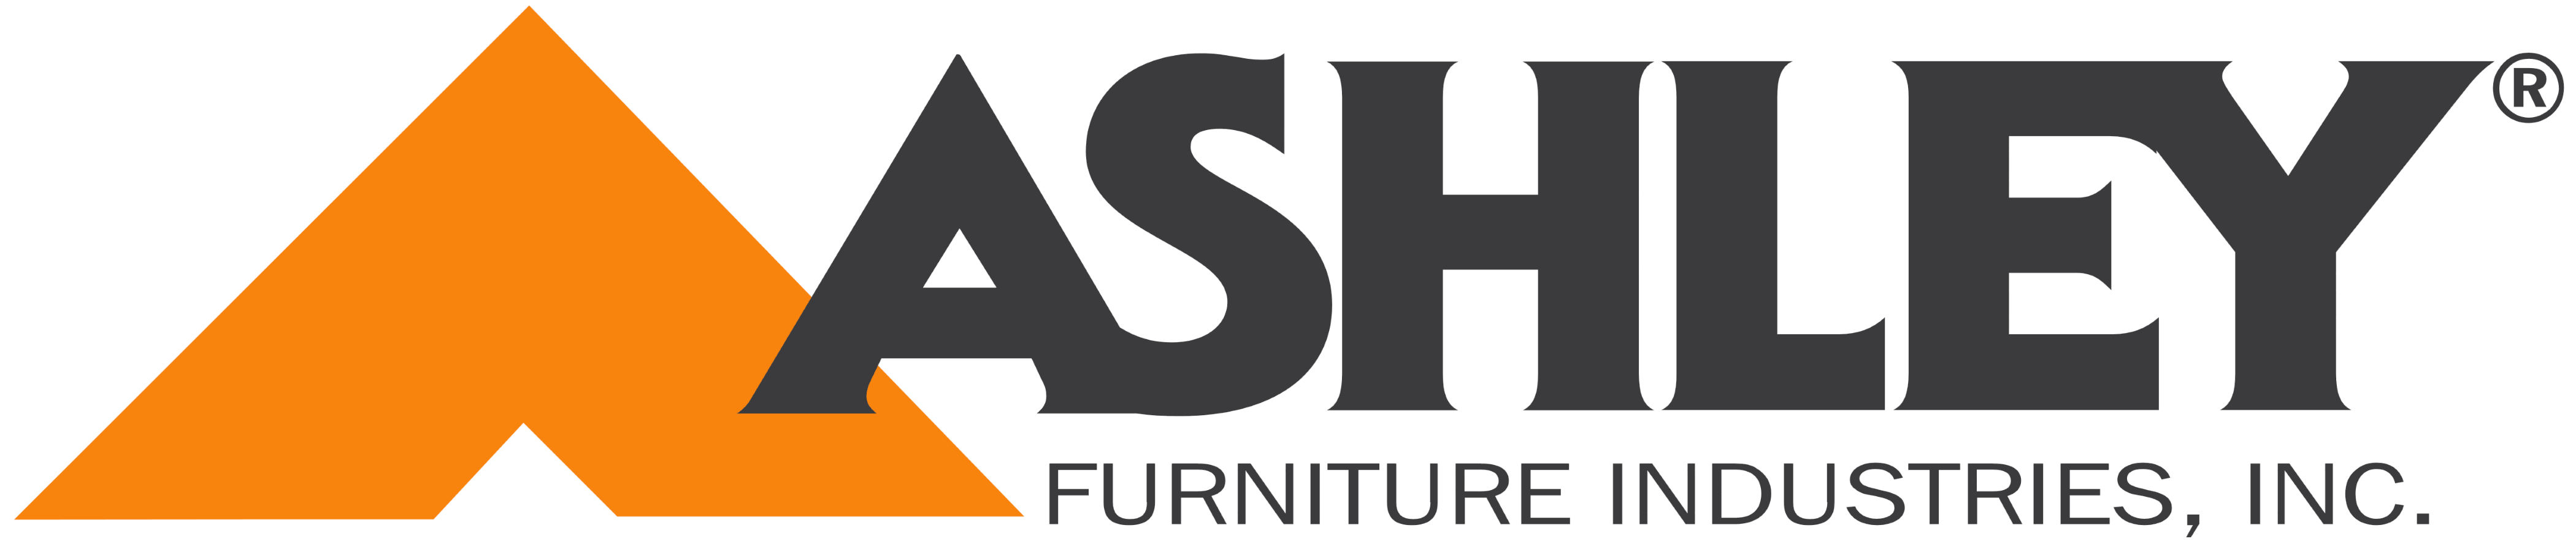 Ashley Furniture logo, logotype